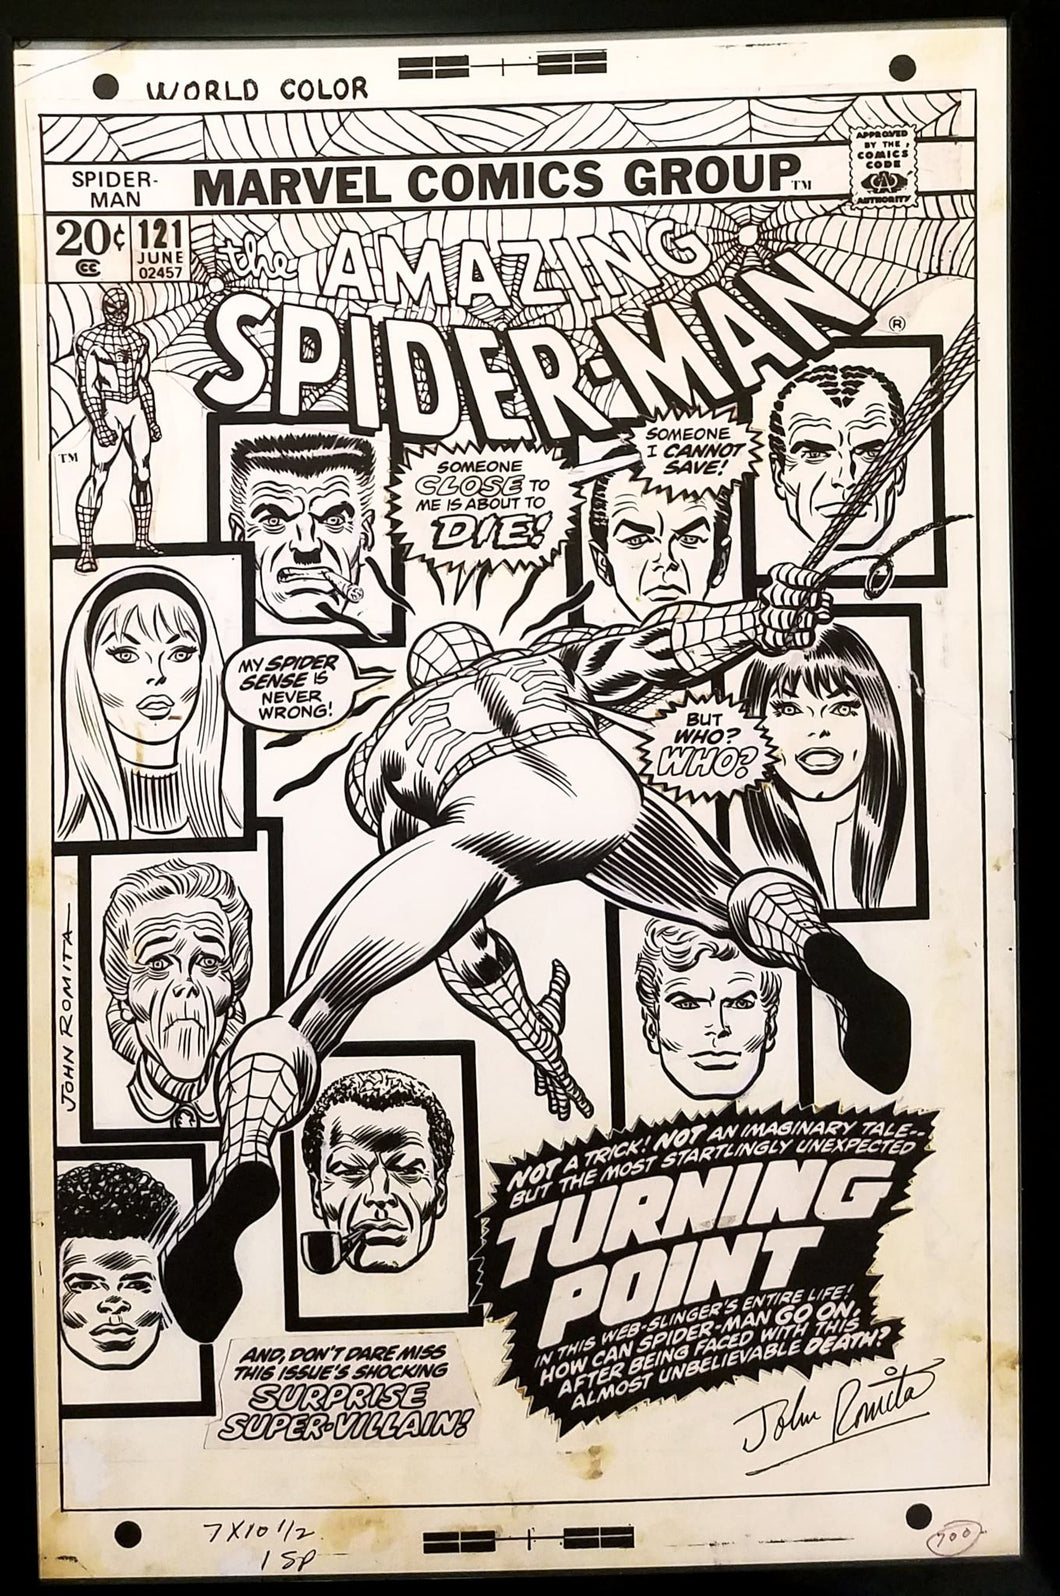 Amazing Spider-Man #121 John Romita 11x17 FRAMED Original Art Poster Marvel Comics